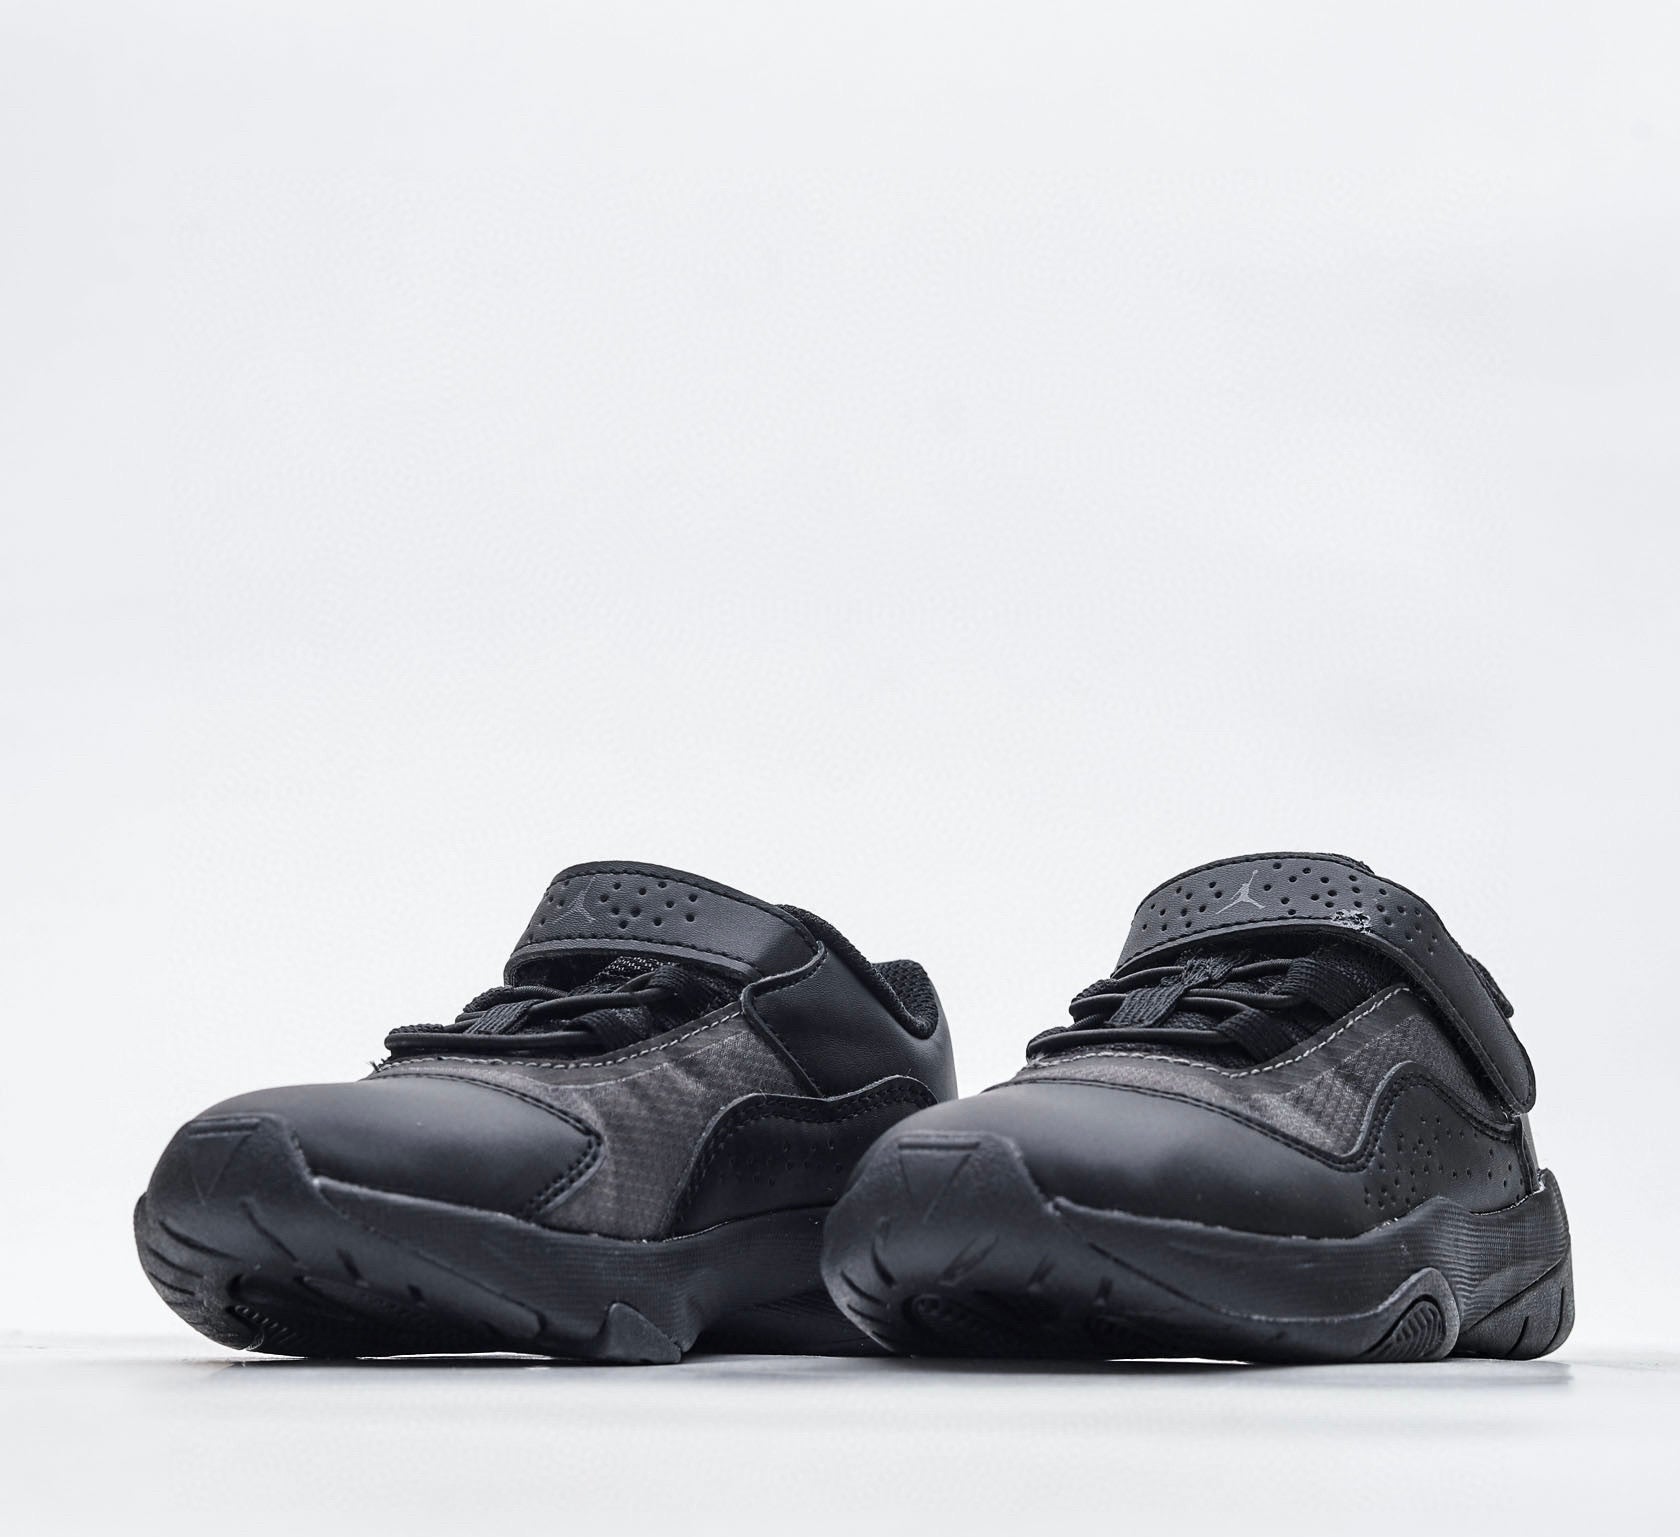 Nike air jordan retro low cut black shoes